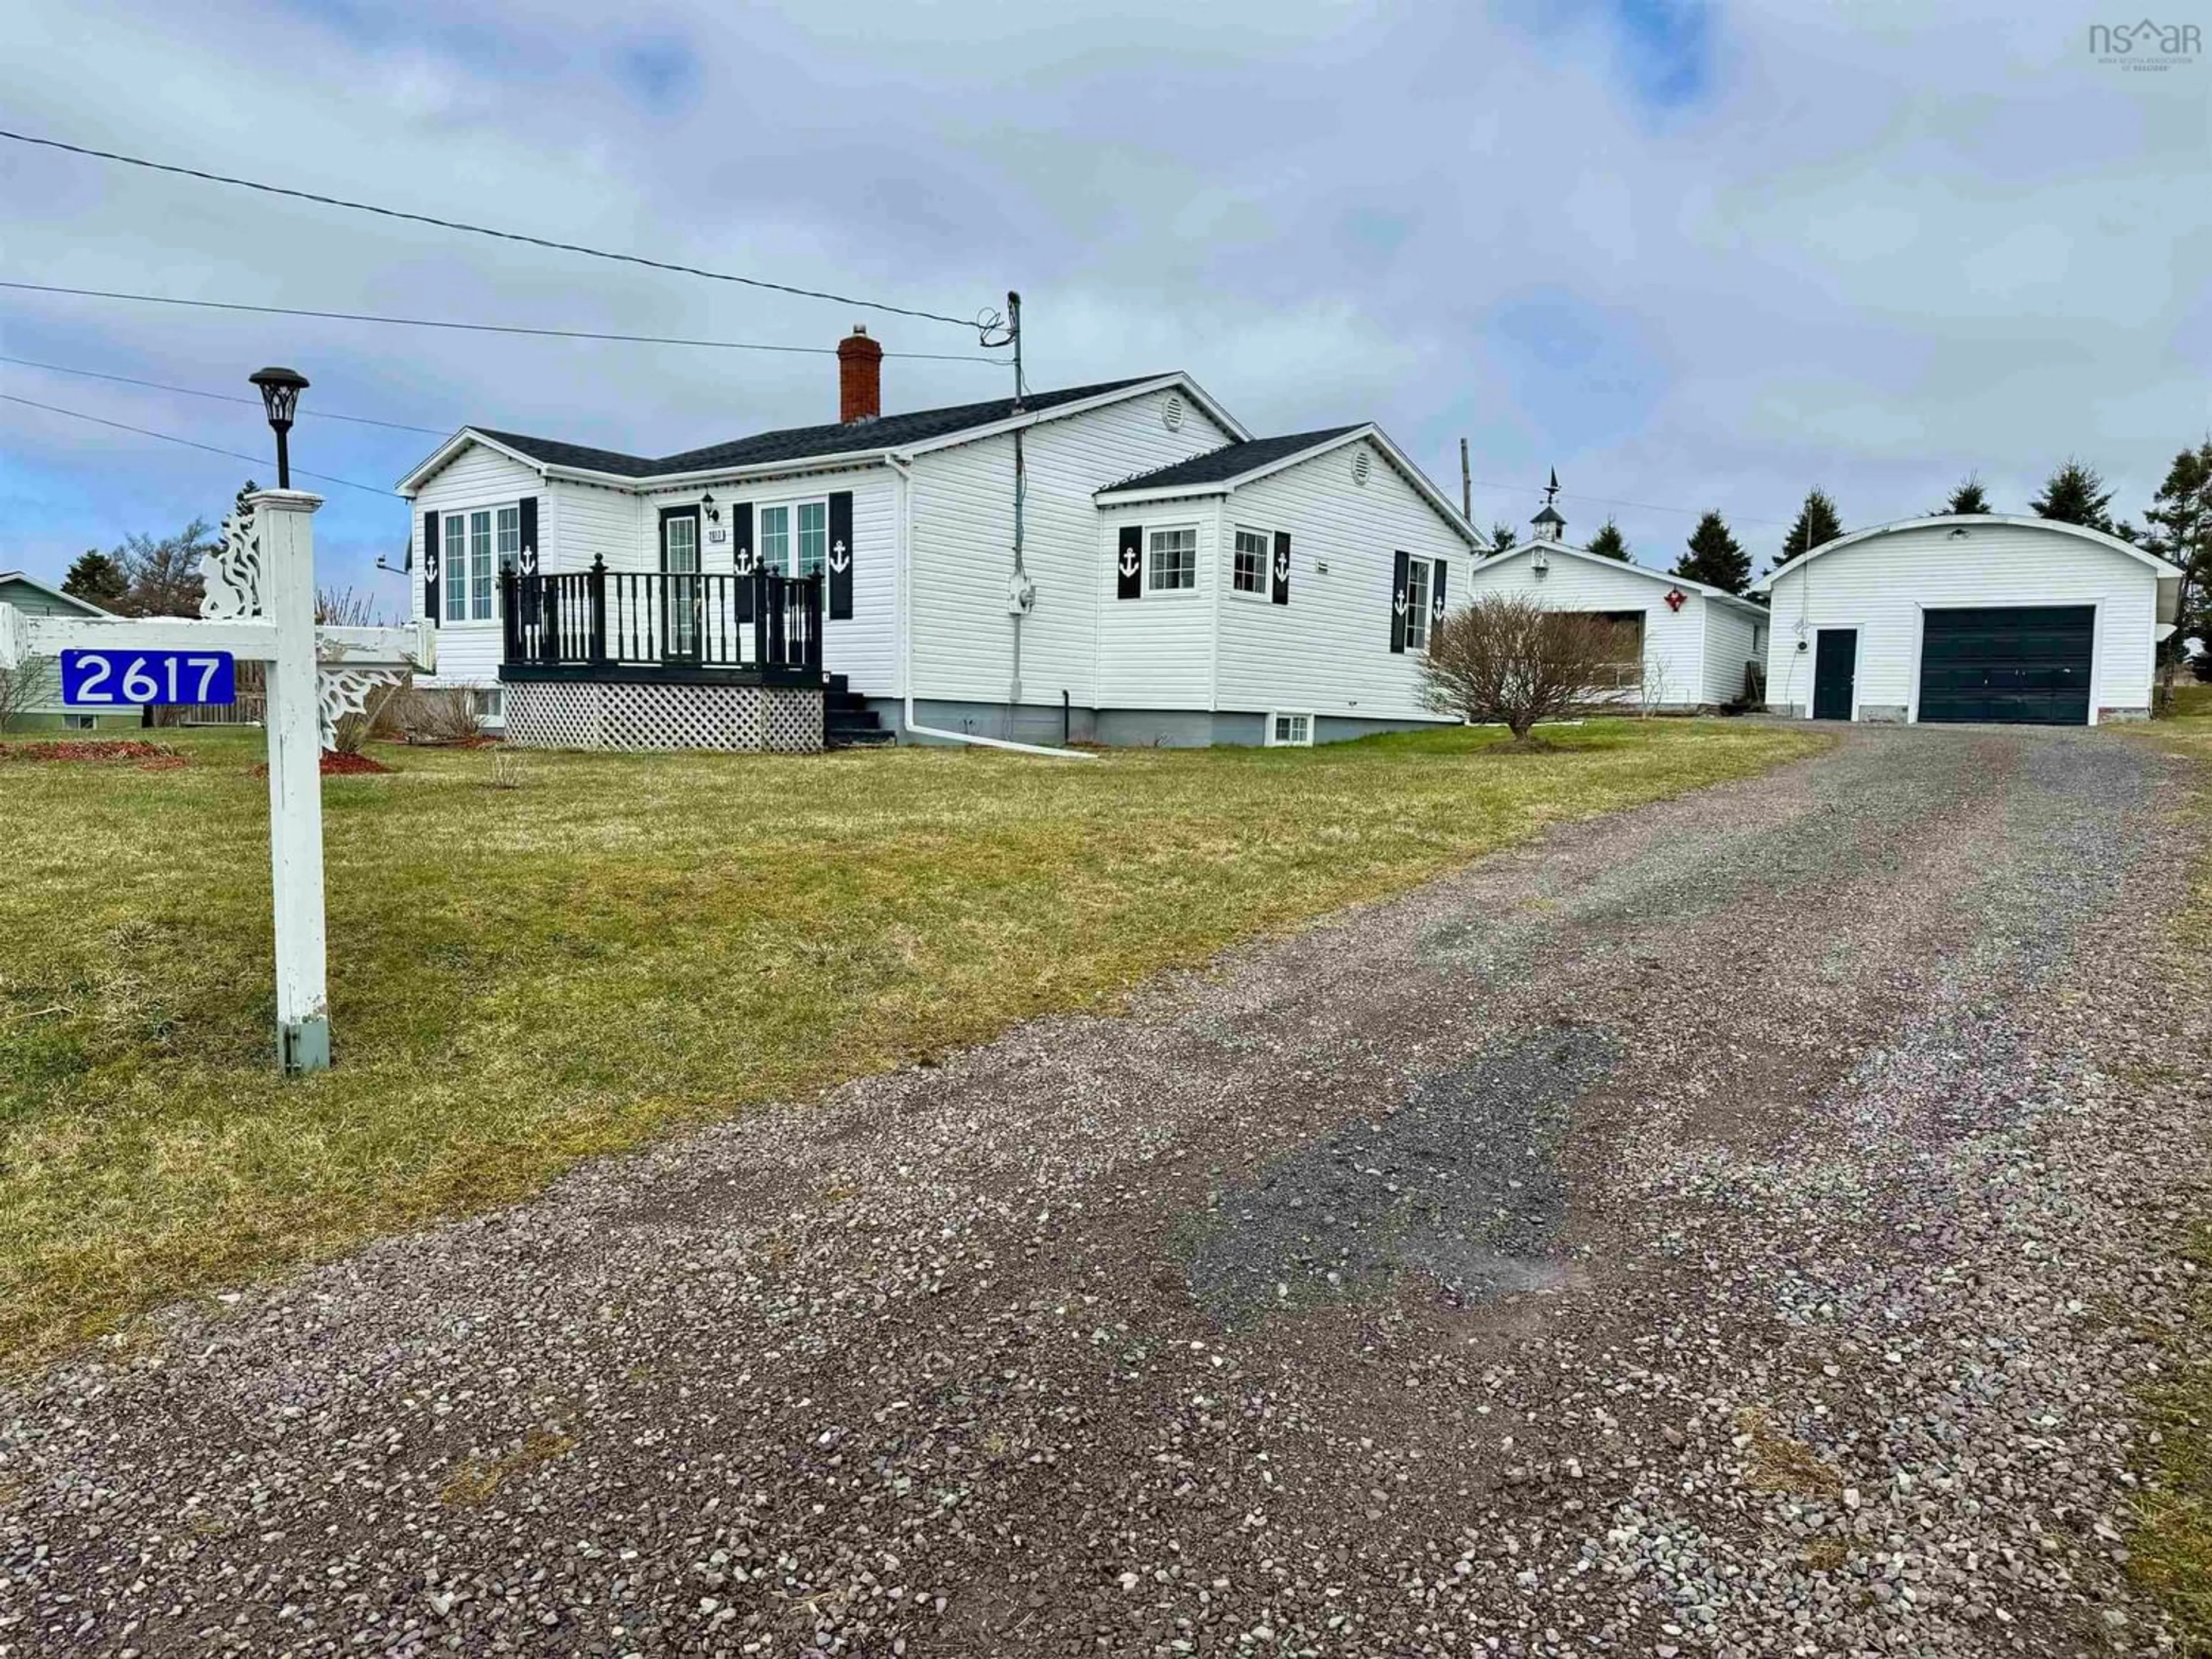 Cottage for 2617 Highway 206, Arichat Nova Scotia B0E 1A0